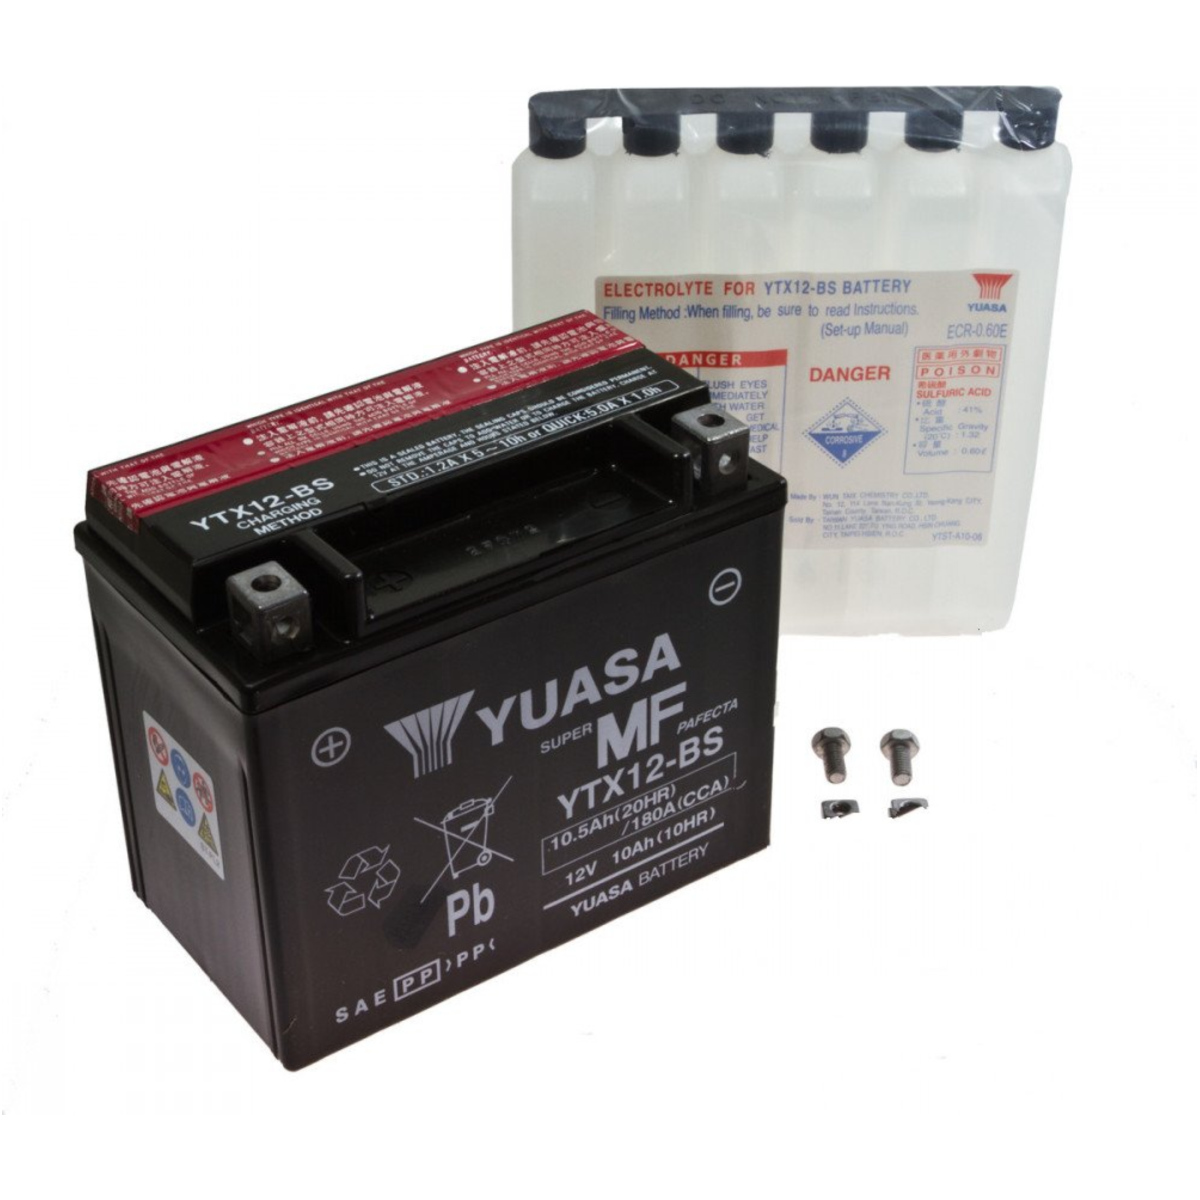 Yuasa ytx12-bs(cp) motorradbatterie ytx12-bs von Yuasa